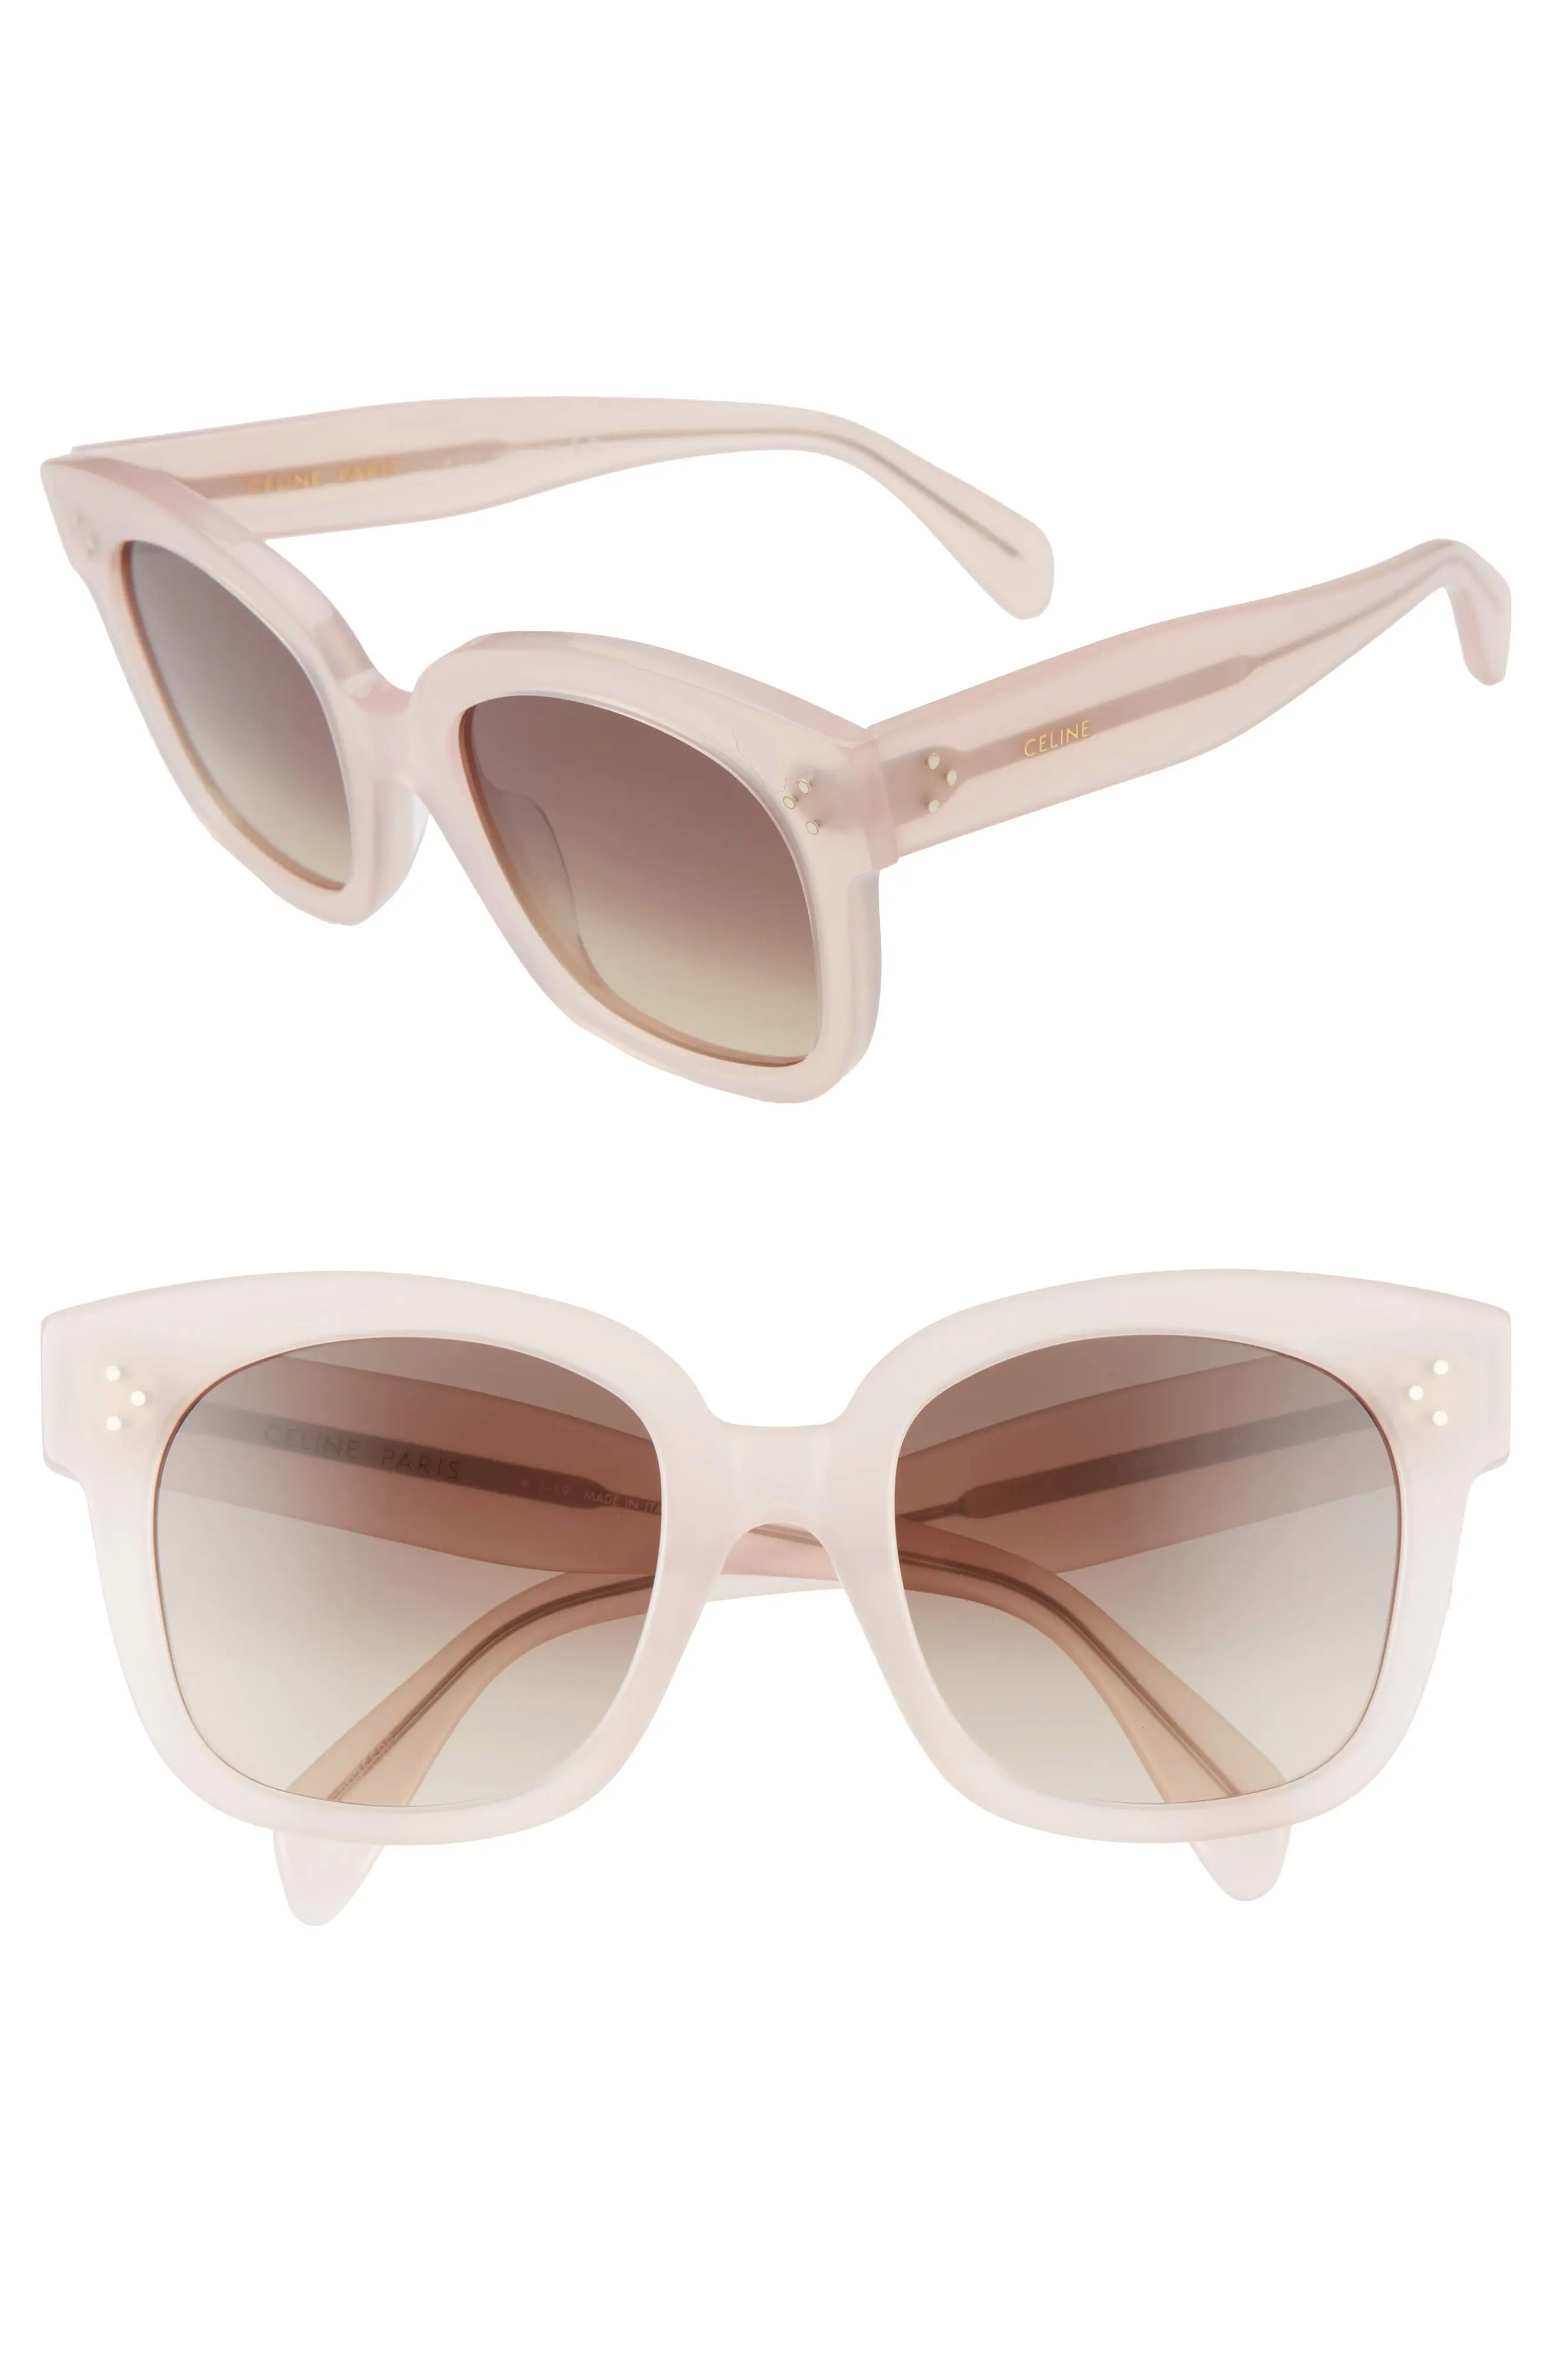 Women's Celine 54mm Square Sunglasses - Pink/ Brown Gradient | Nordstrom